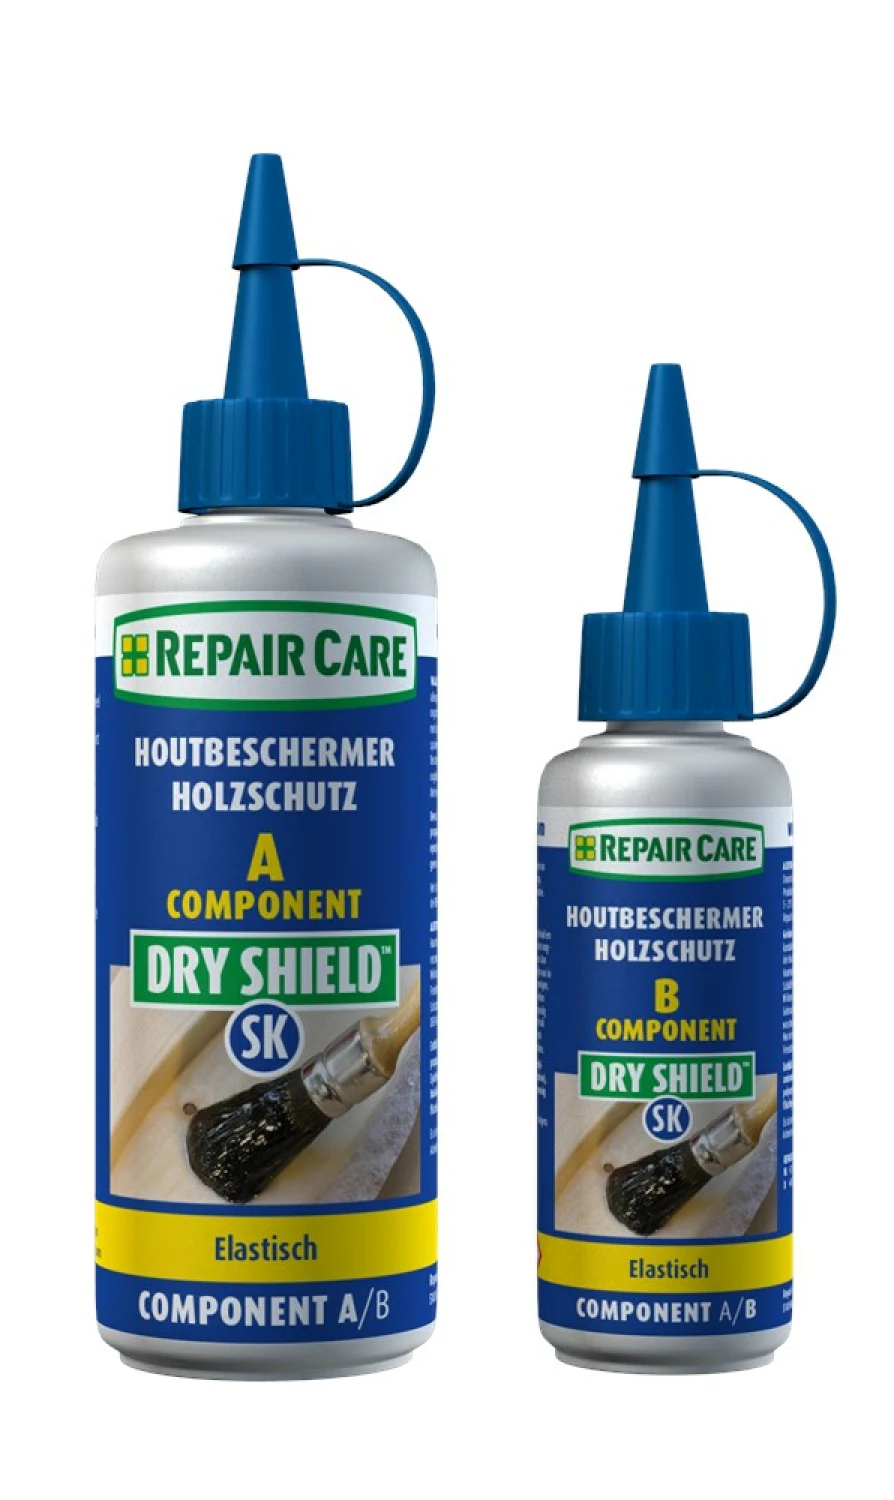 Repair Care Dry Shield 2031001 Houtbeschermer SK-image